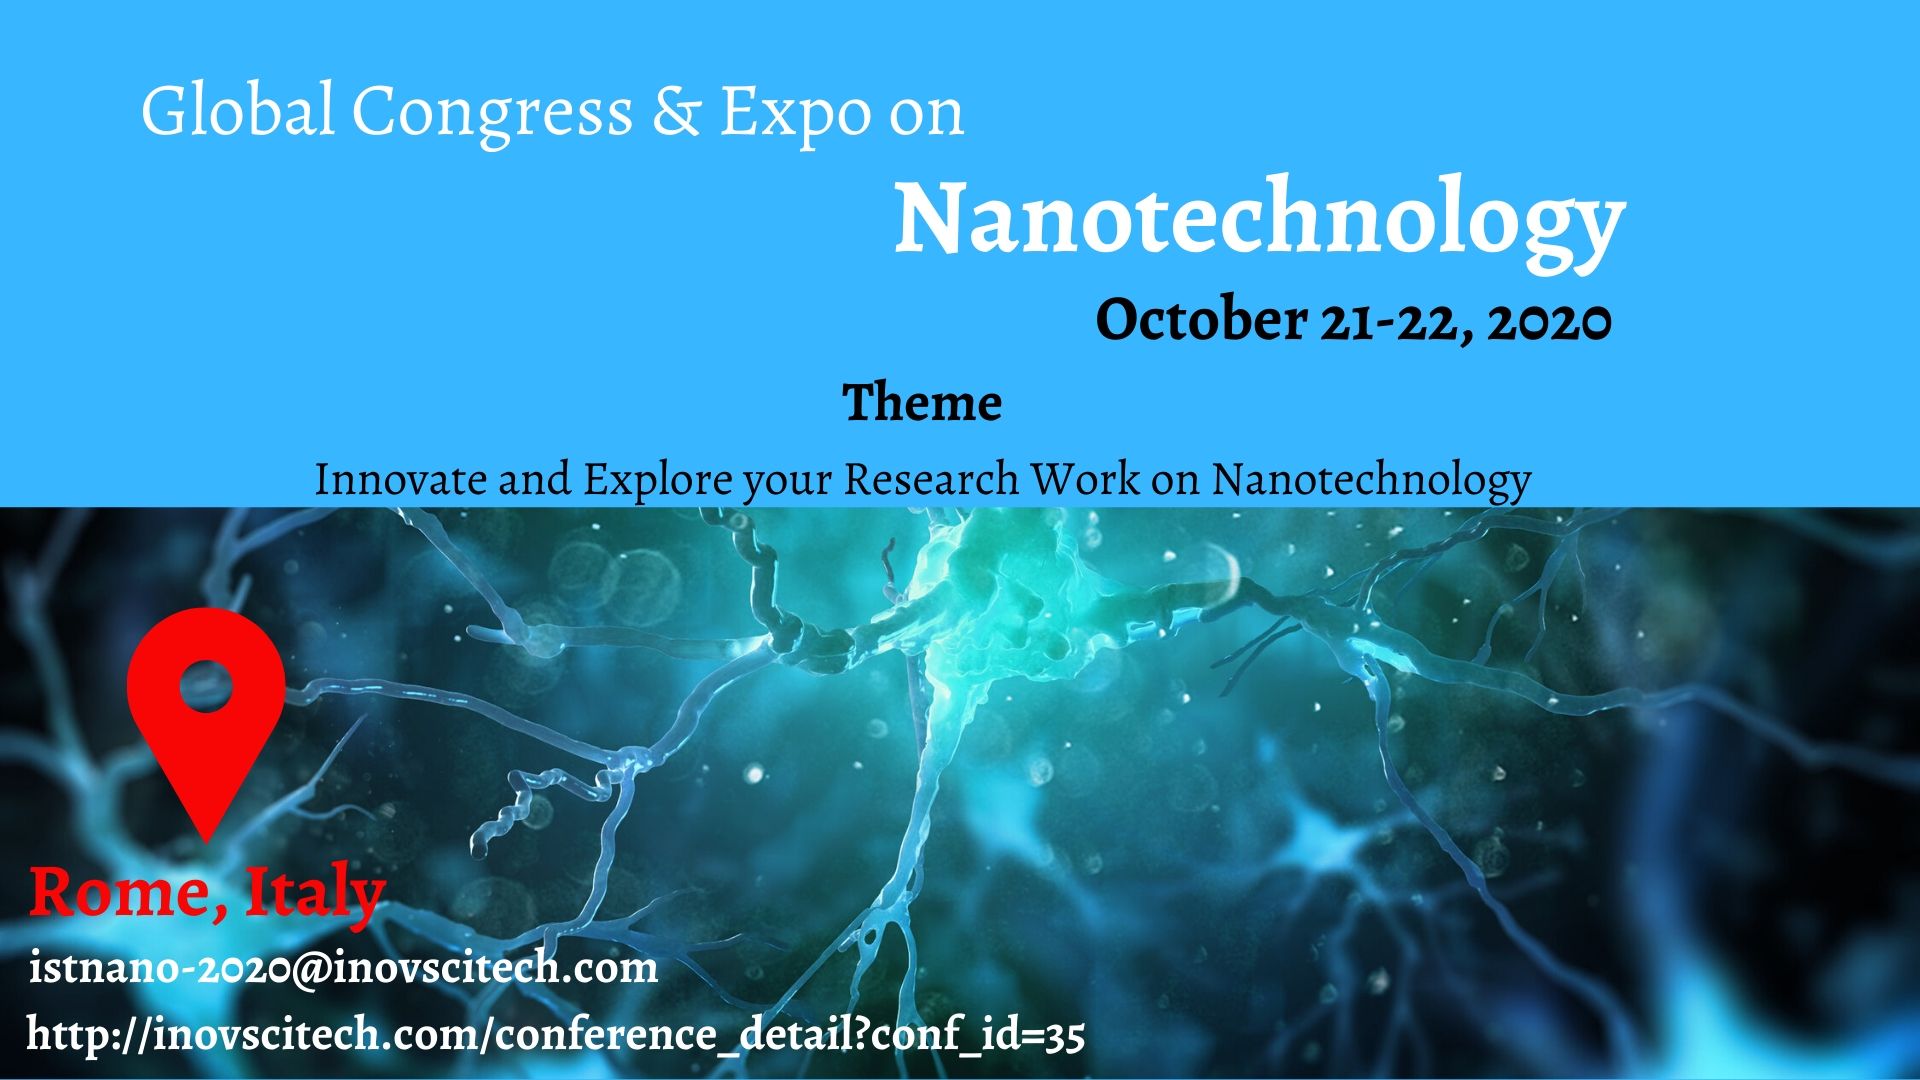 Global Congress & Expo on Nanotechnology, Rome, Italy